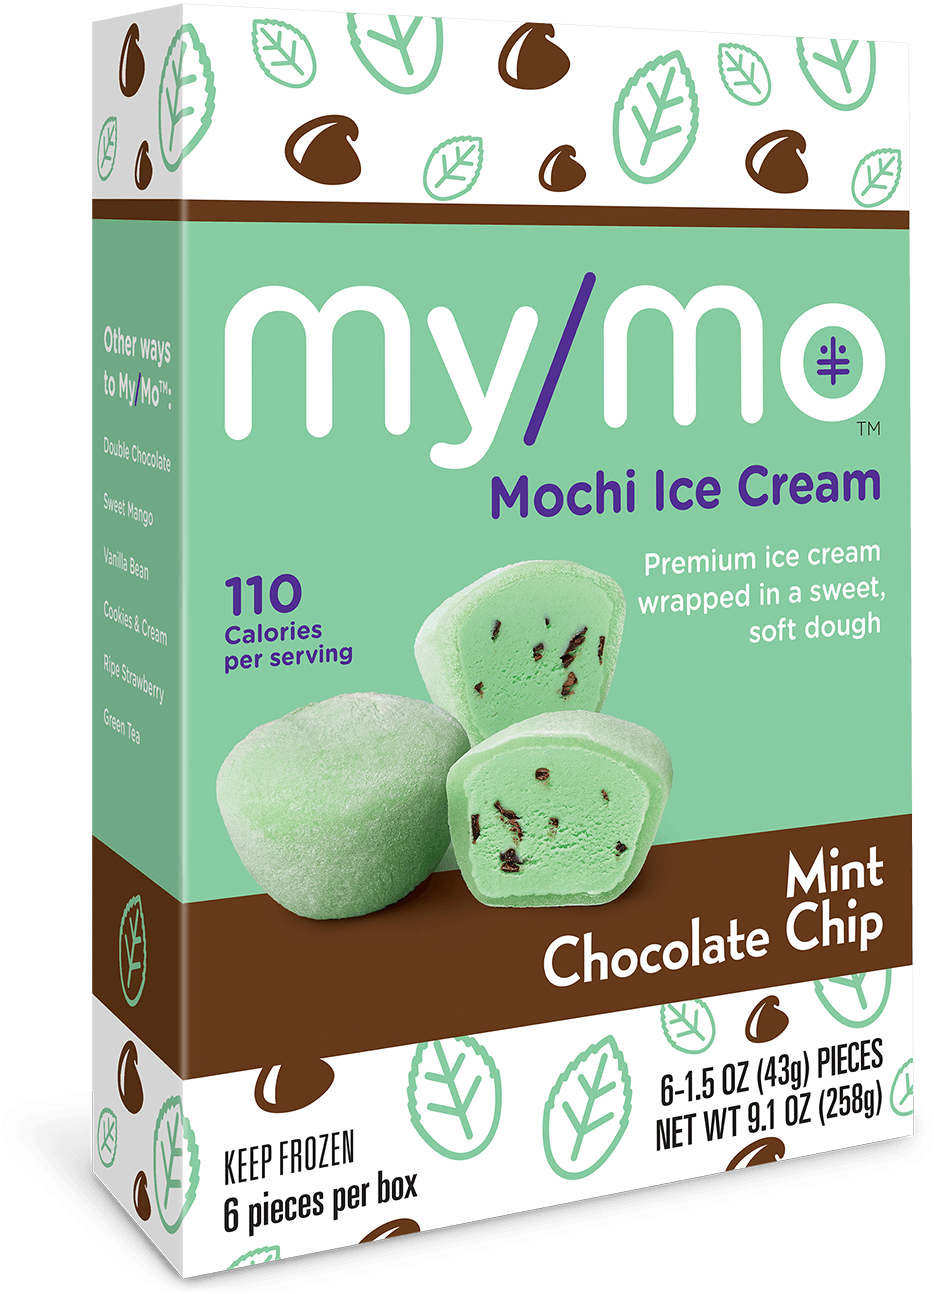 Mint Chocolate Chip Mochi Ice Cream | My/Mo Mochi Ice Cream